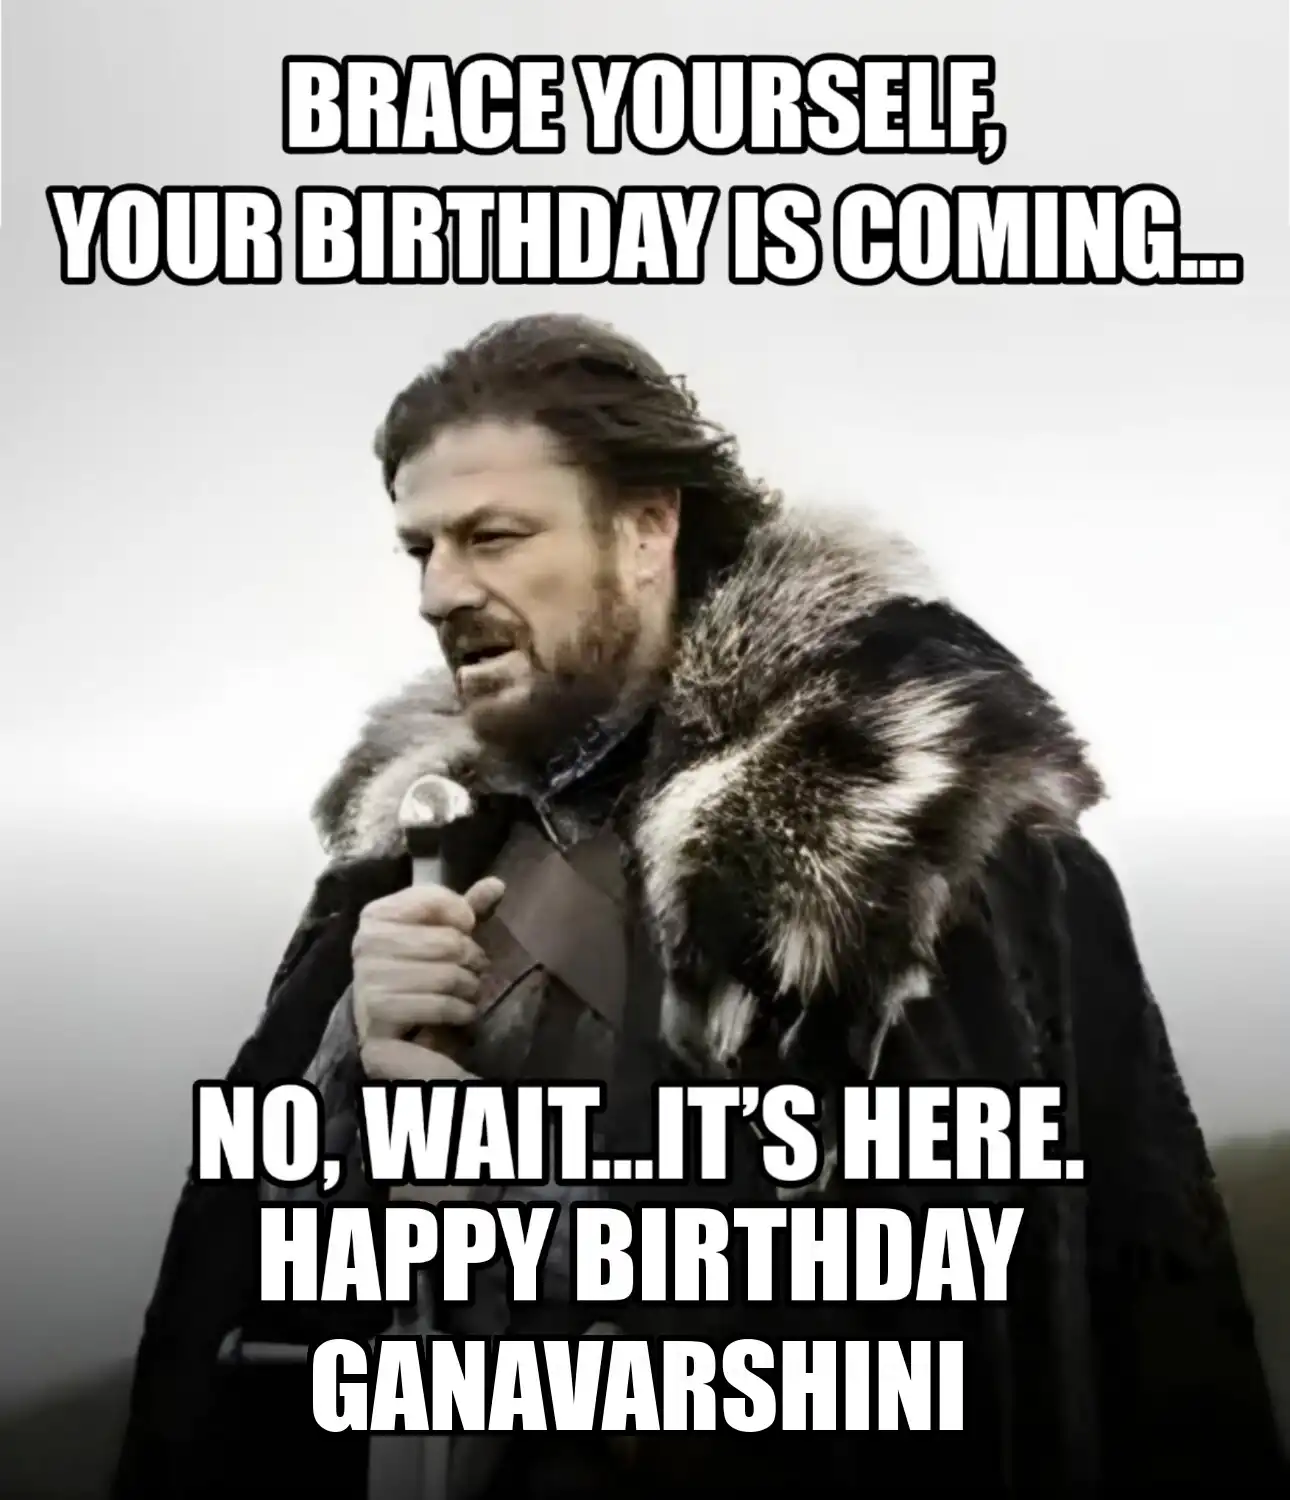 Happy Birthday Ganavarshini Brace Yourself Your Birthday Is Coming Meme